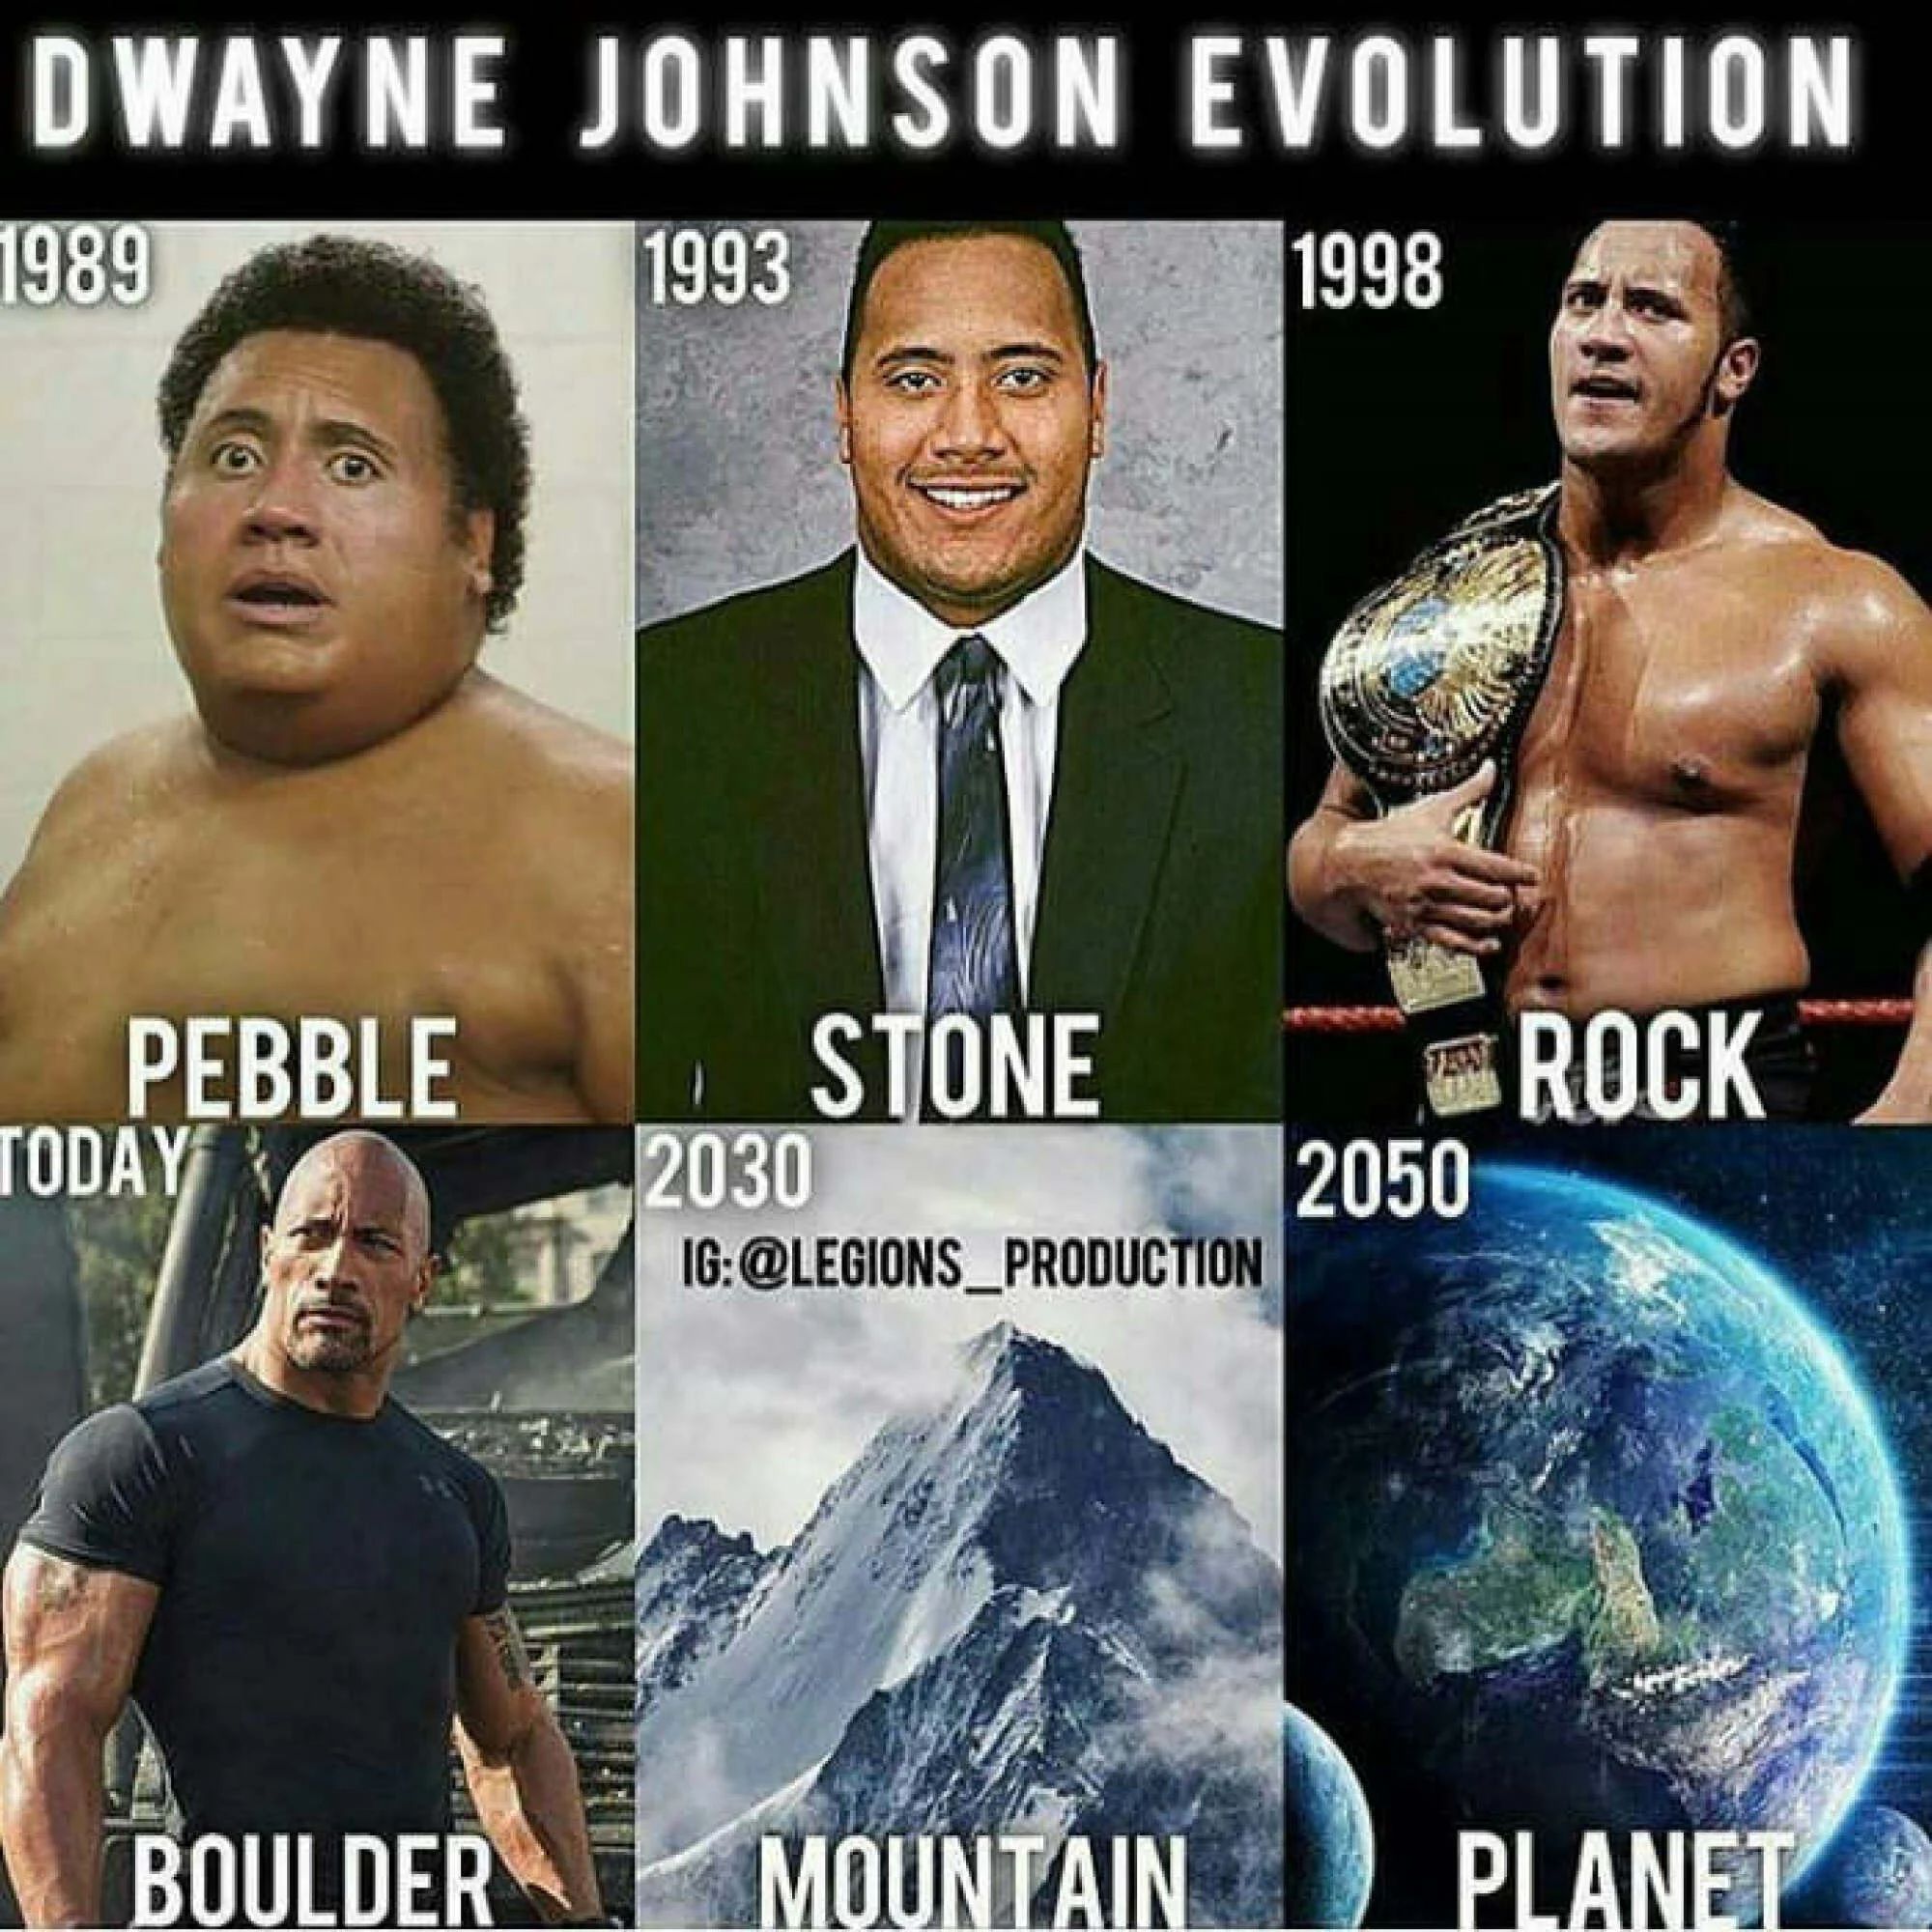 the rock meme